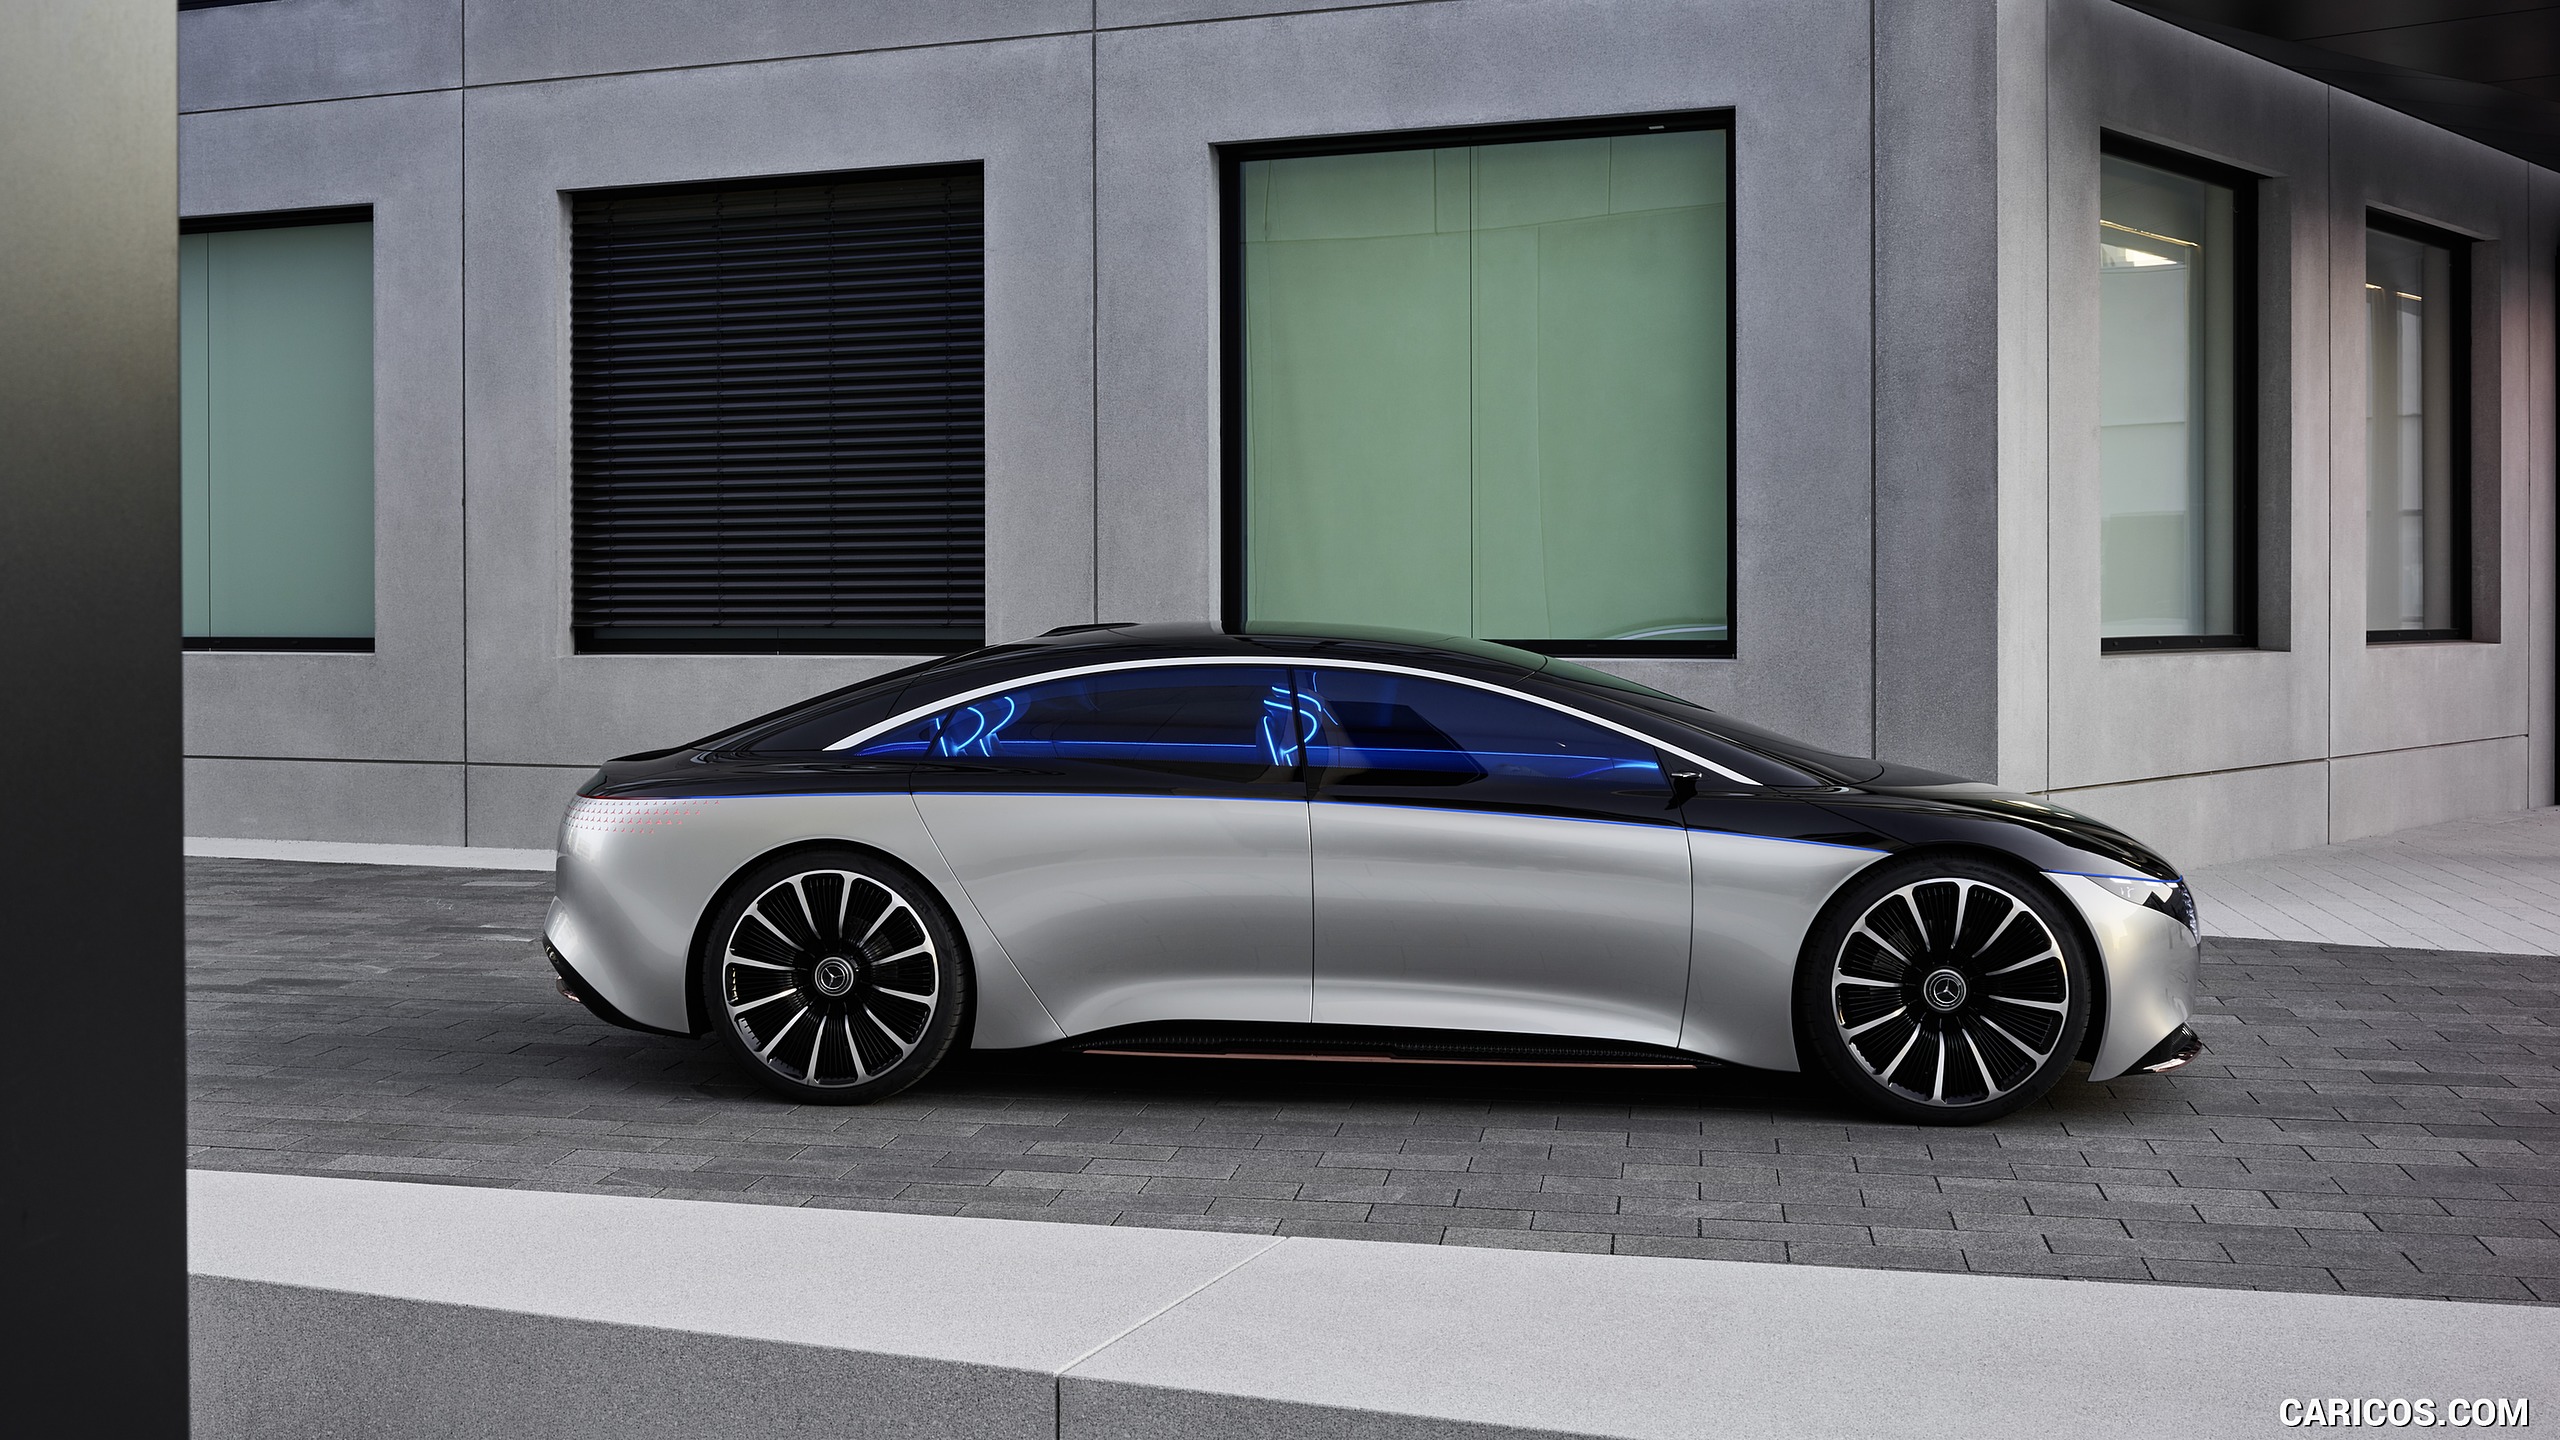 2019 Mercedes-Benz Vision EQS Concept - Side, #12 of 58